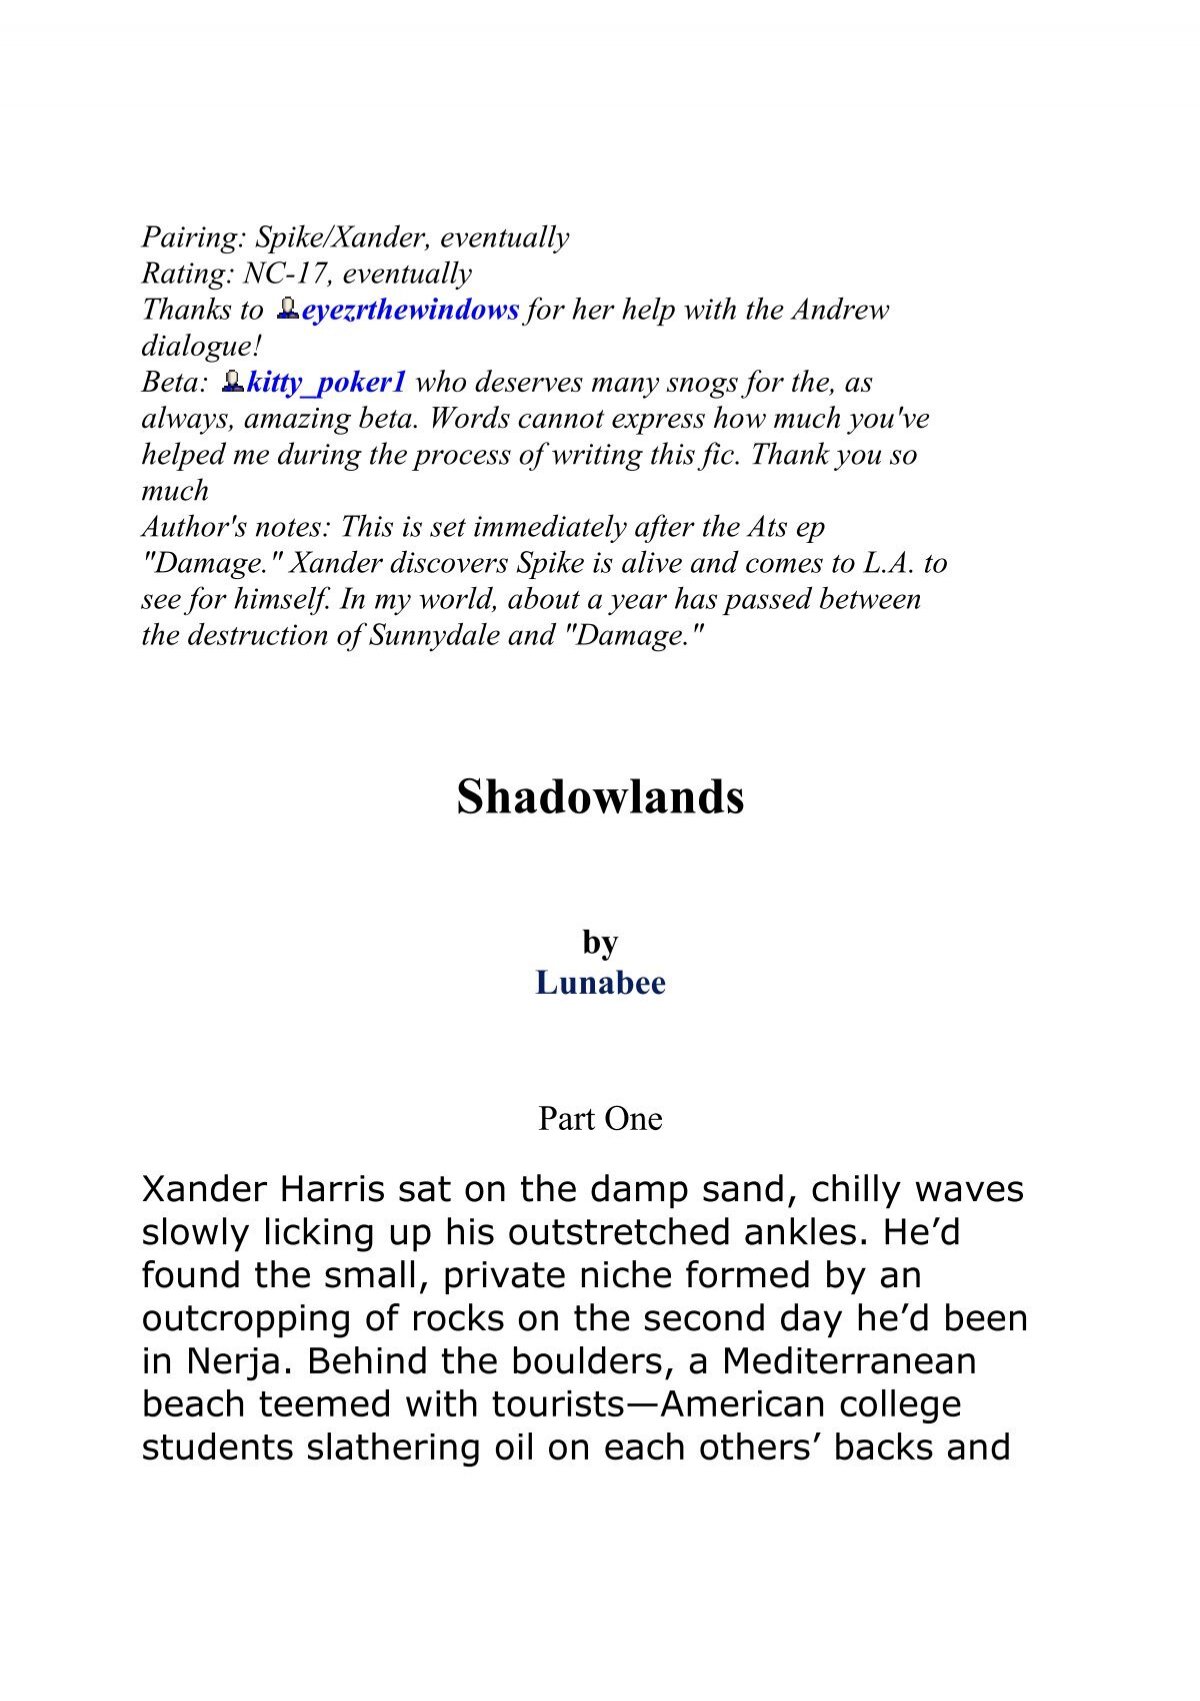 Shadowlands - Spander Files